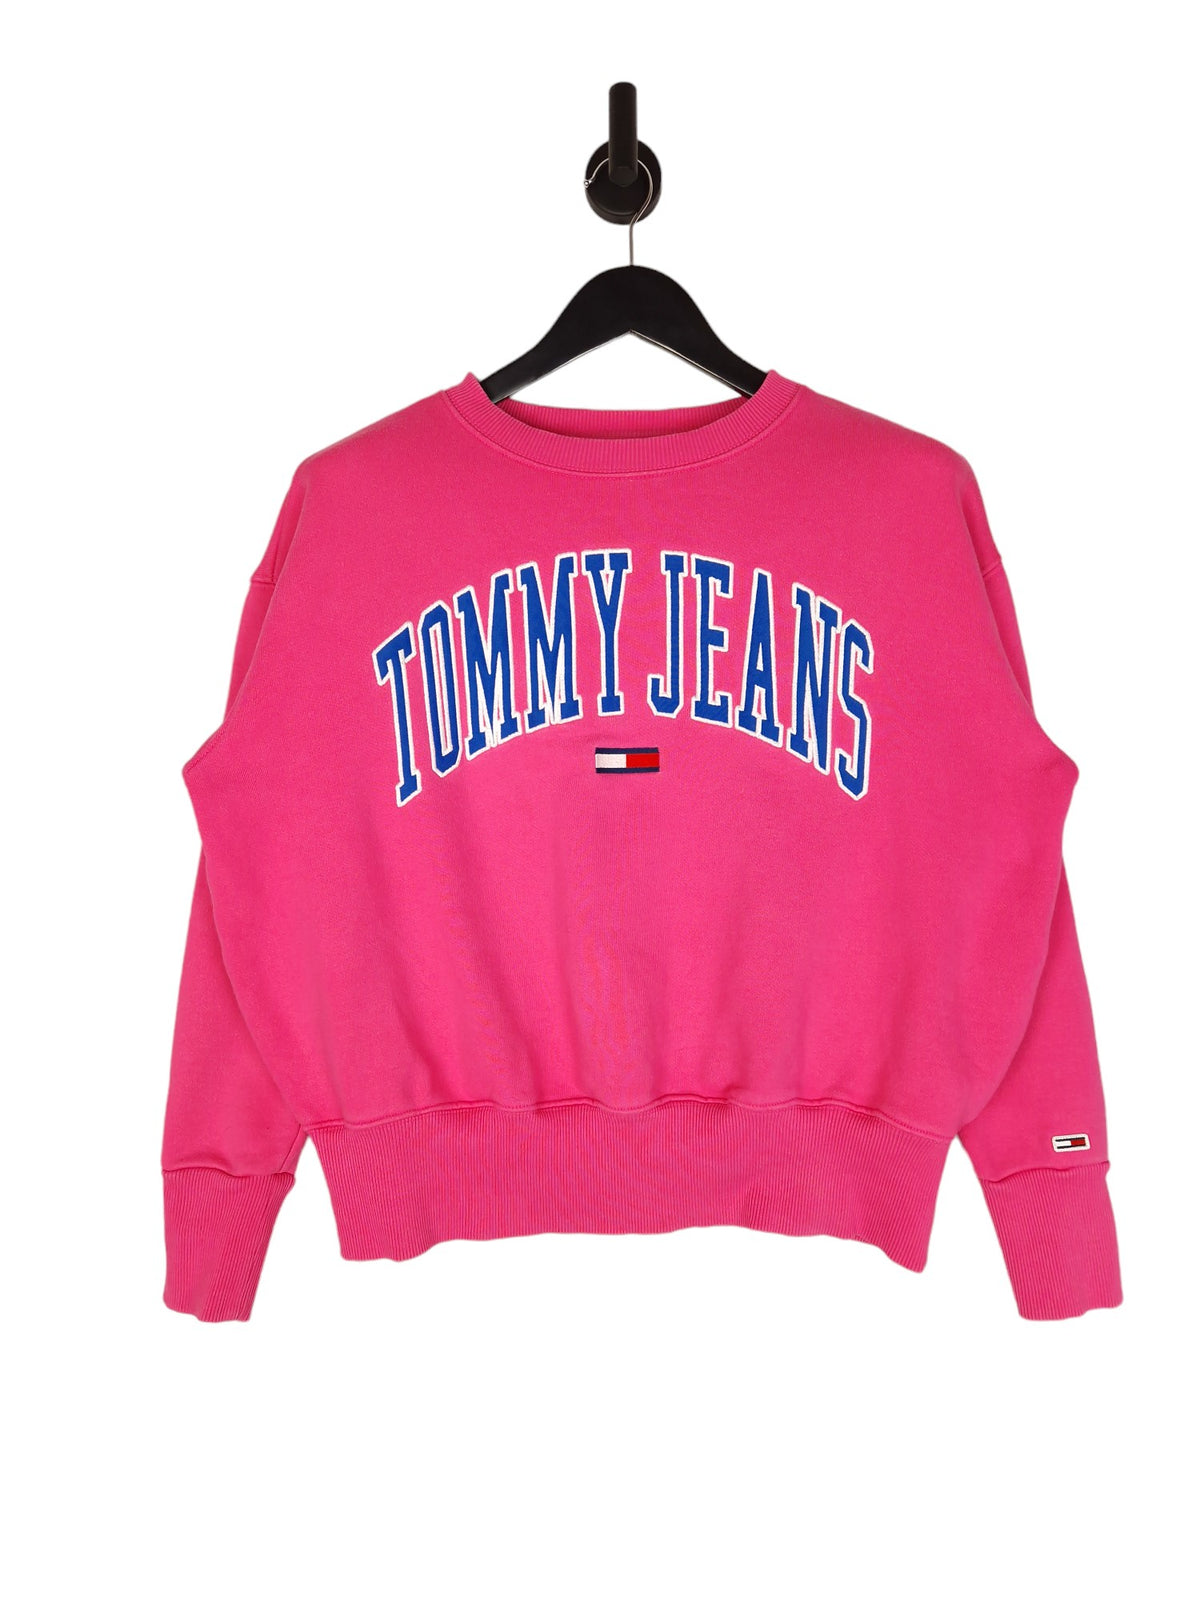 Tommy Jeans Sweatshirt- Size Small